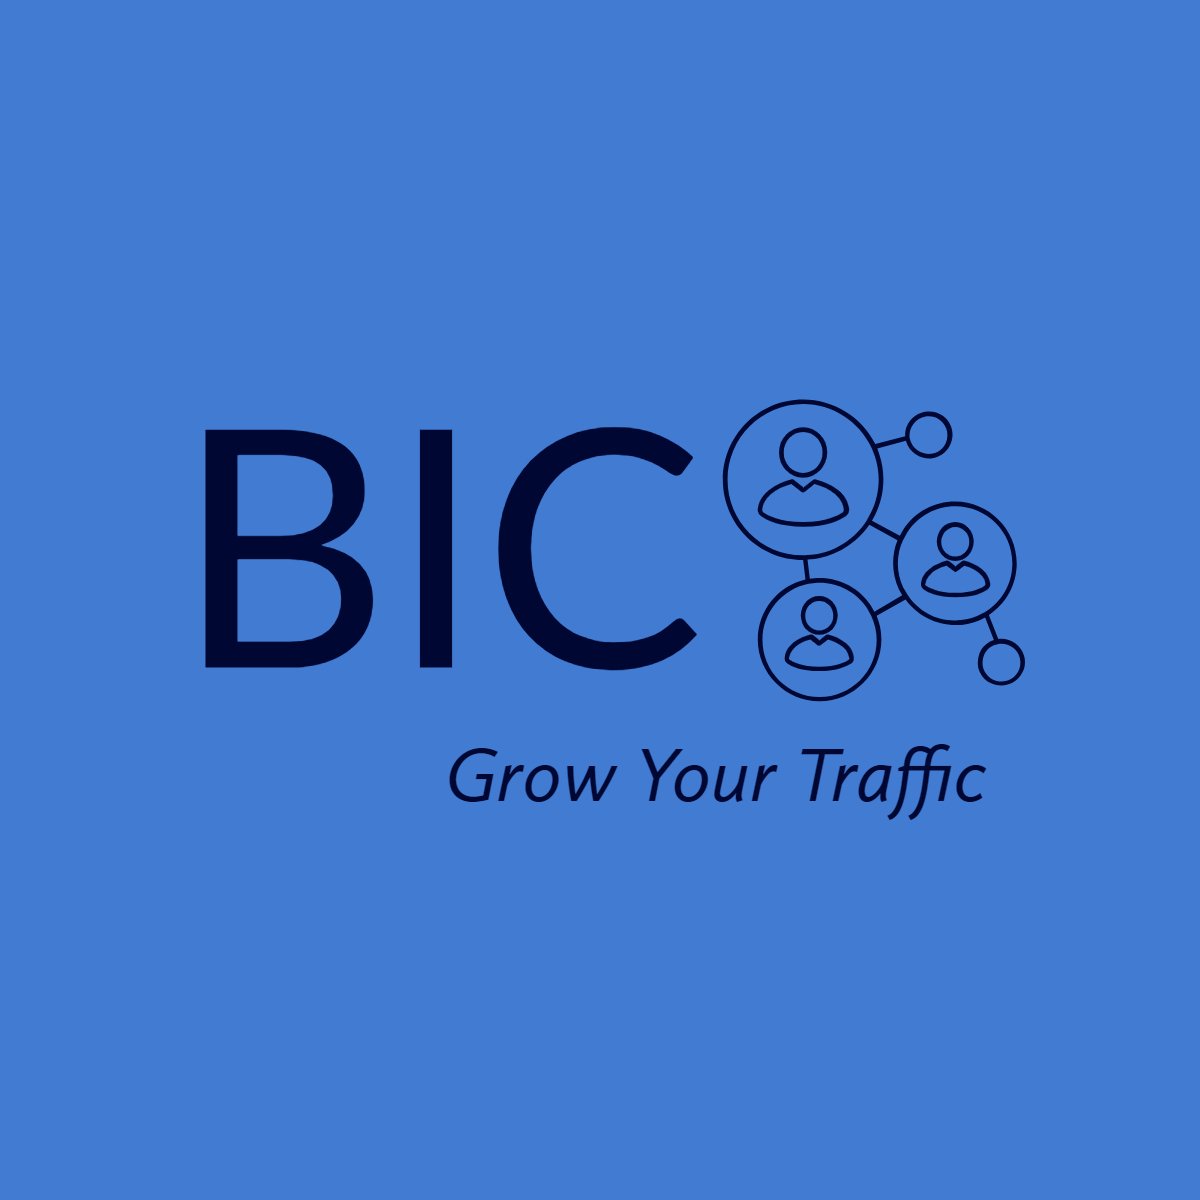 bloggingiscool.com online forums for traffic growth